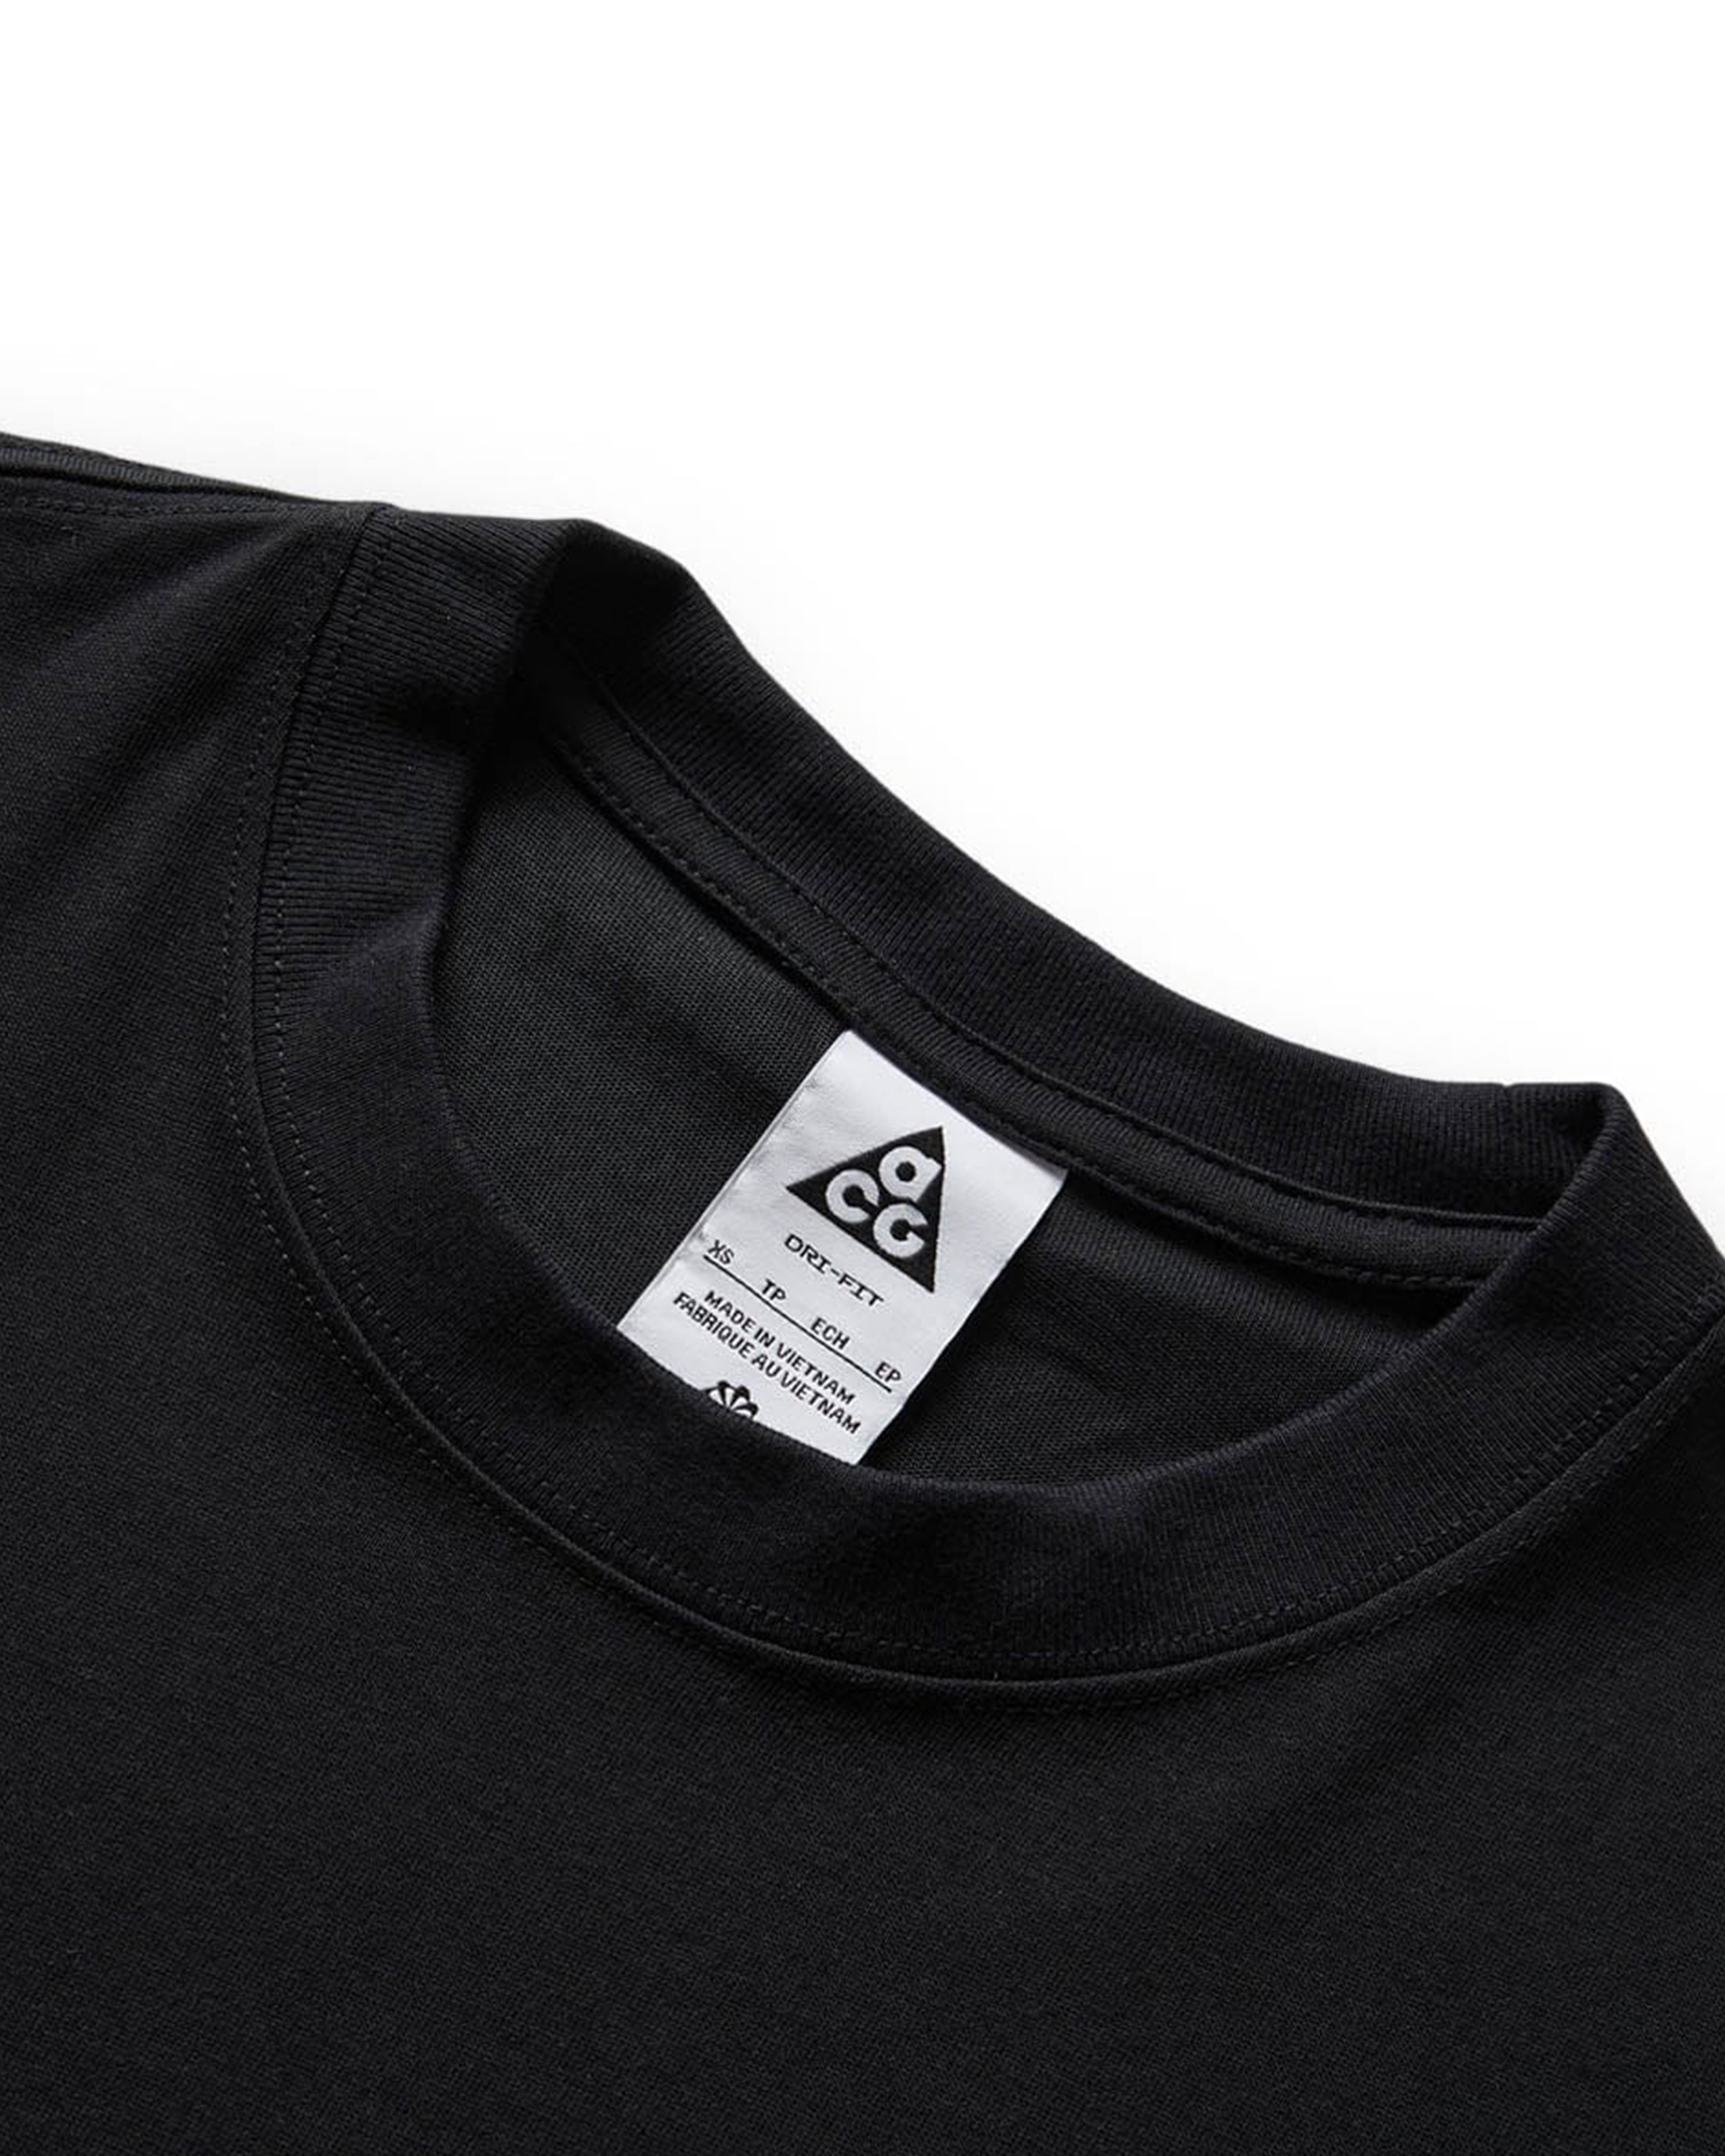 Lung T-shirt - Black / LT Smoke / Summit White